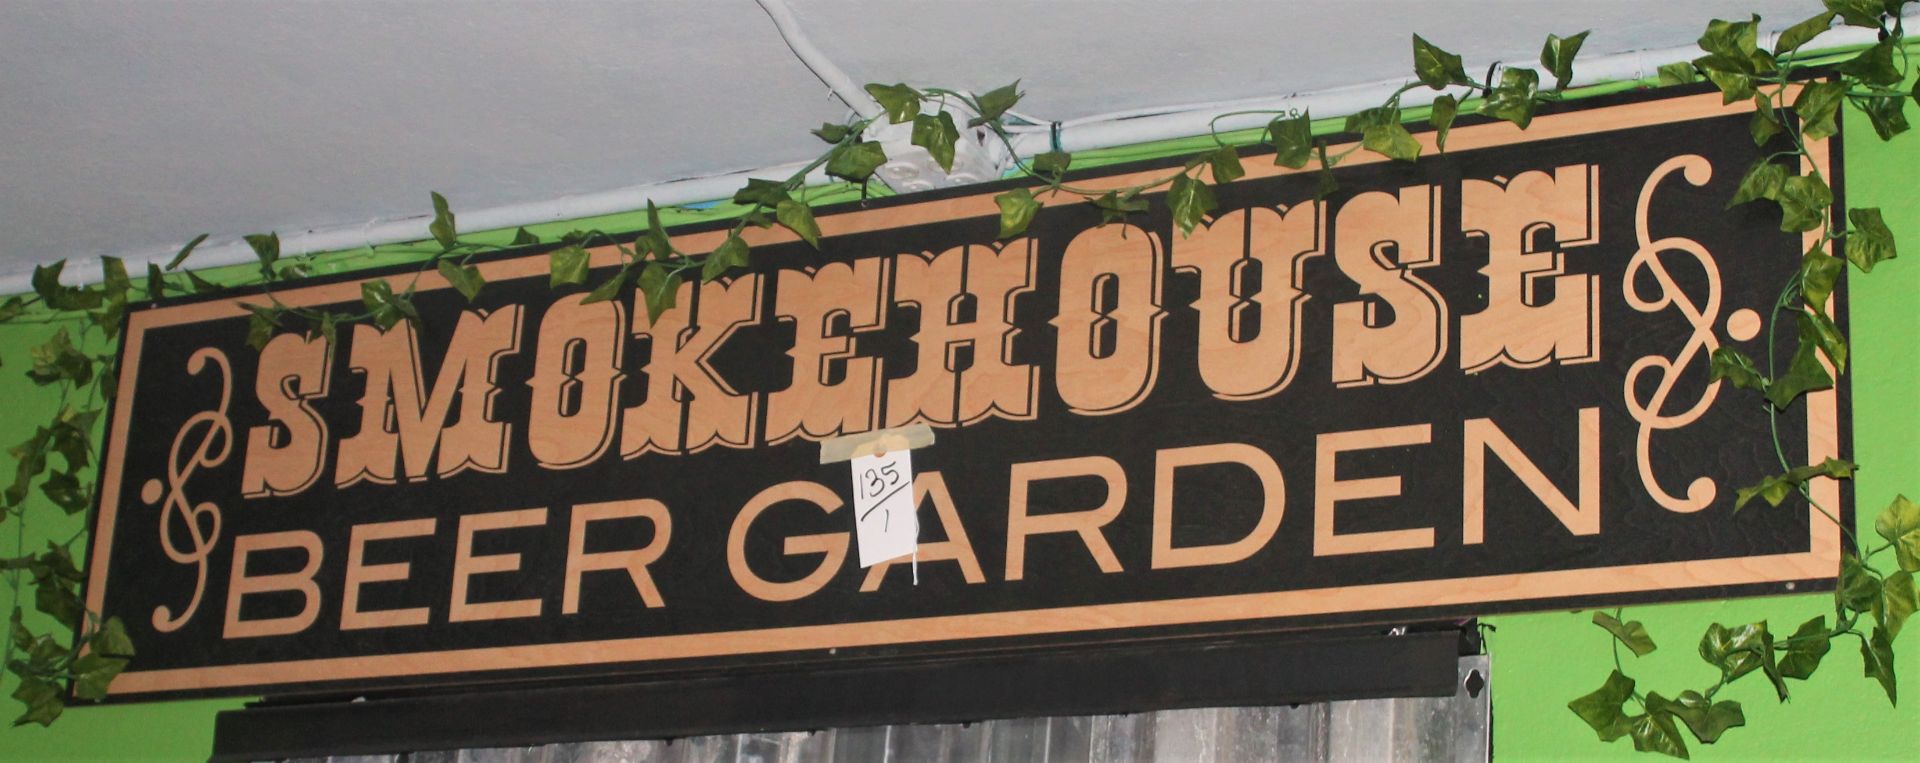 Smokehouse Sign